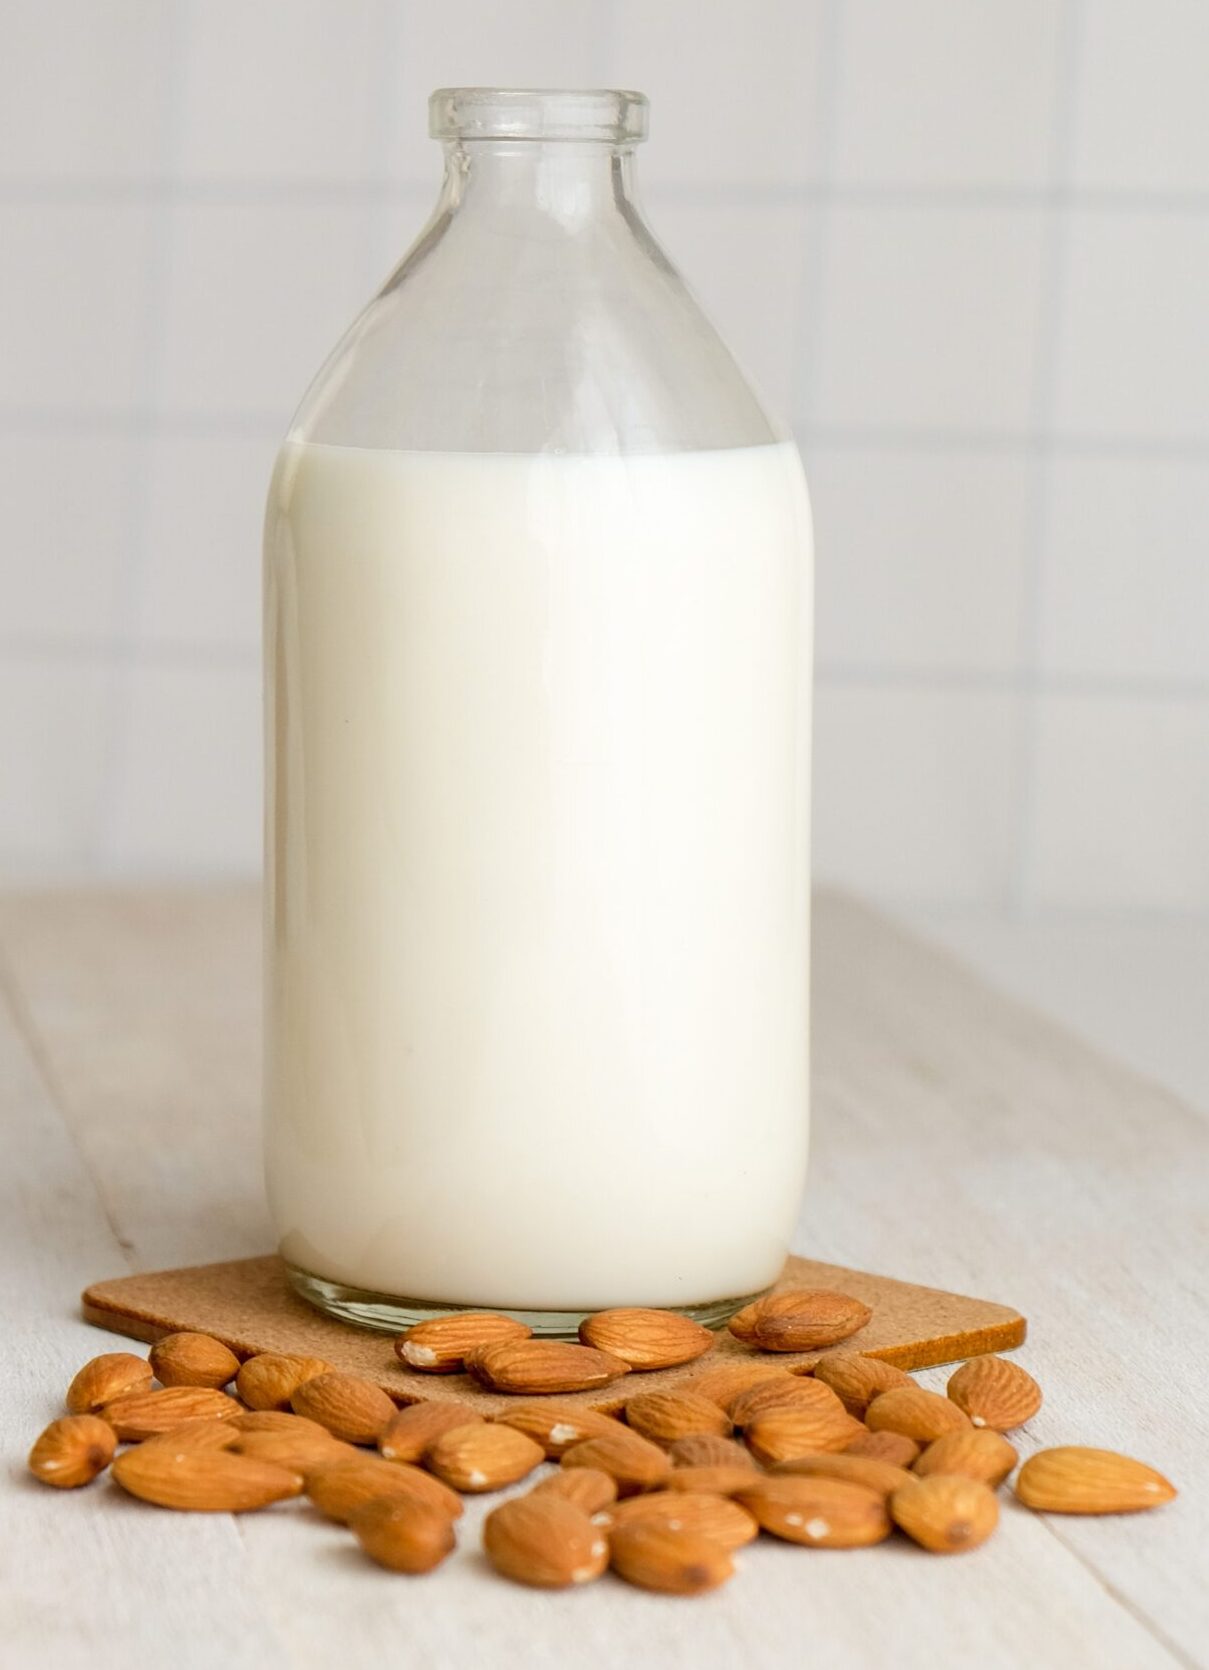 A jug of almond milk